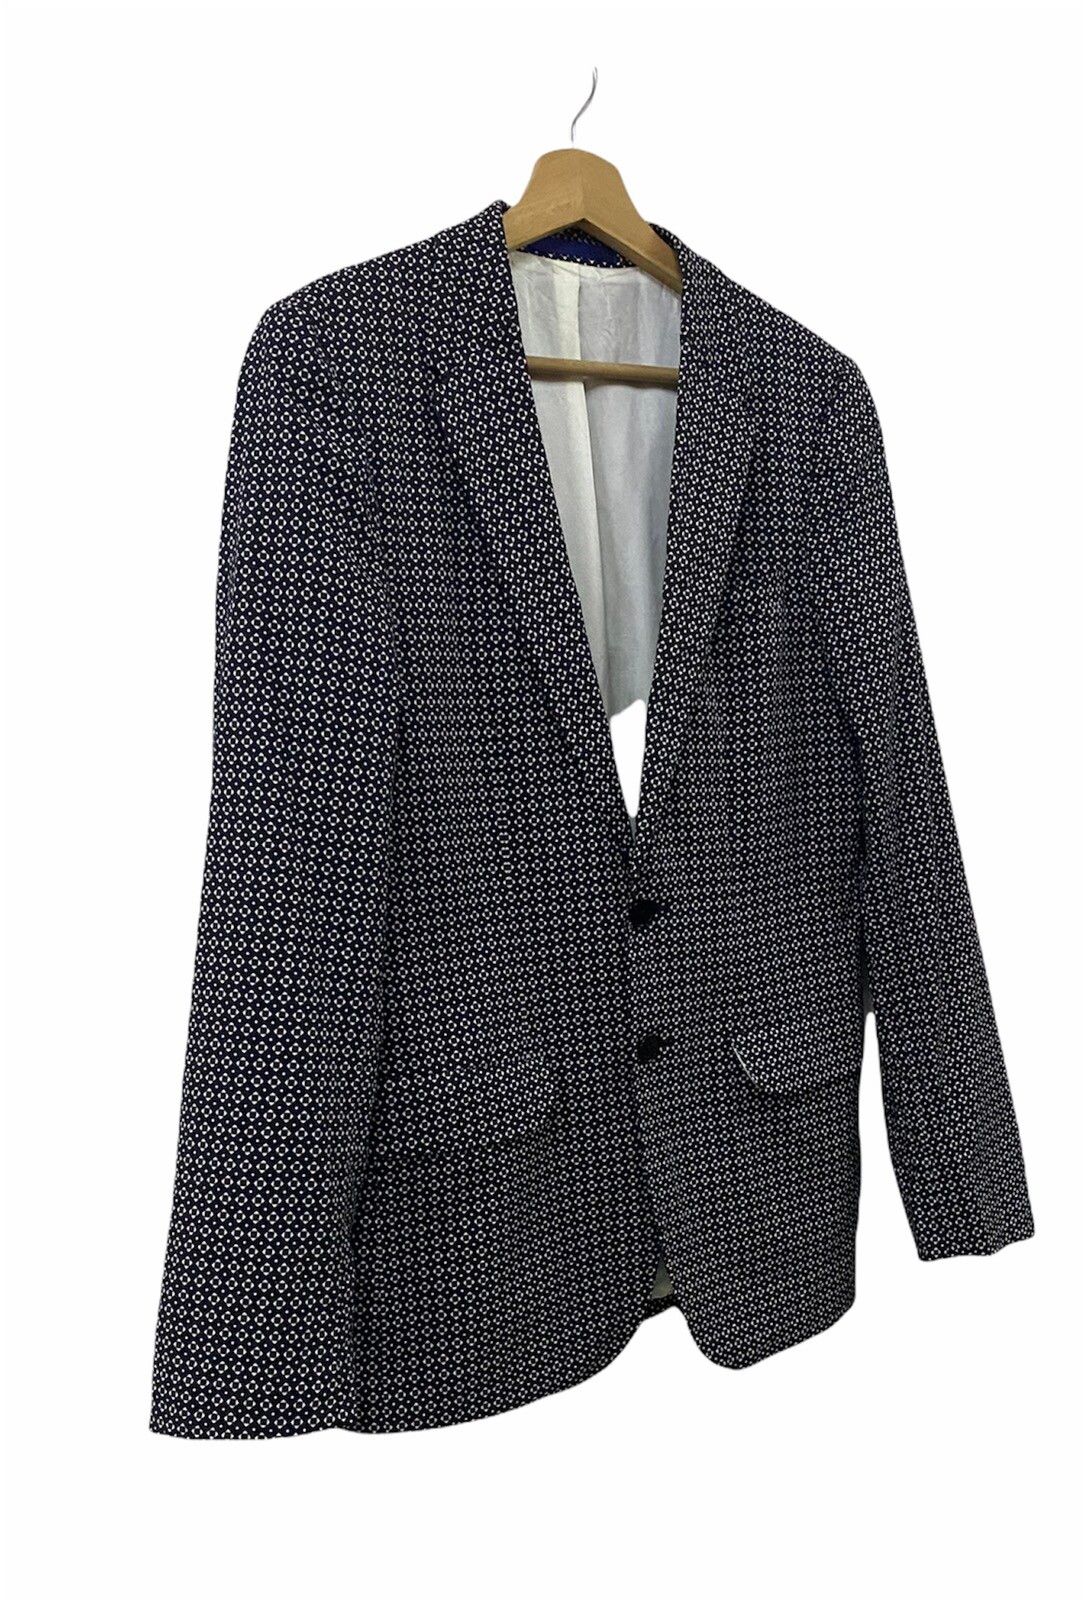 Rare🌑Paul Smith Uk Blazer Style Jacket Geometric Design - 8